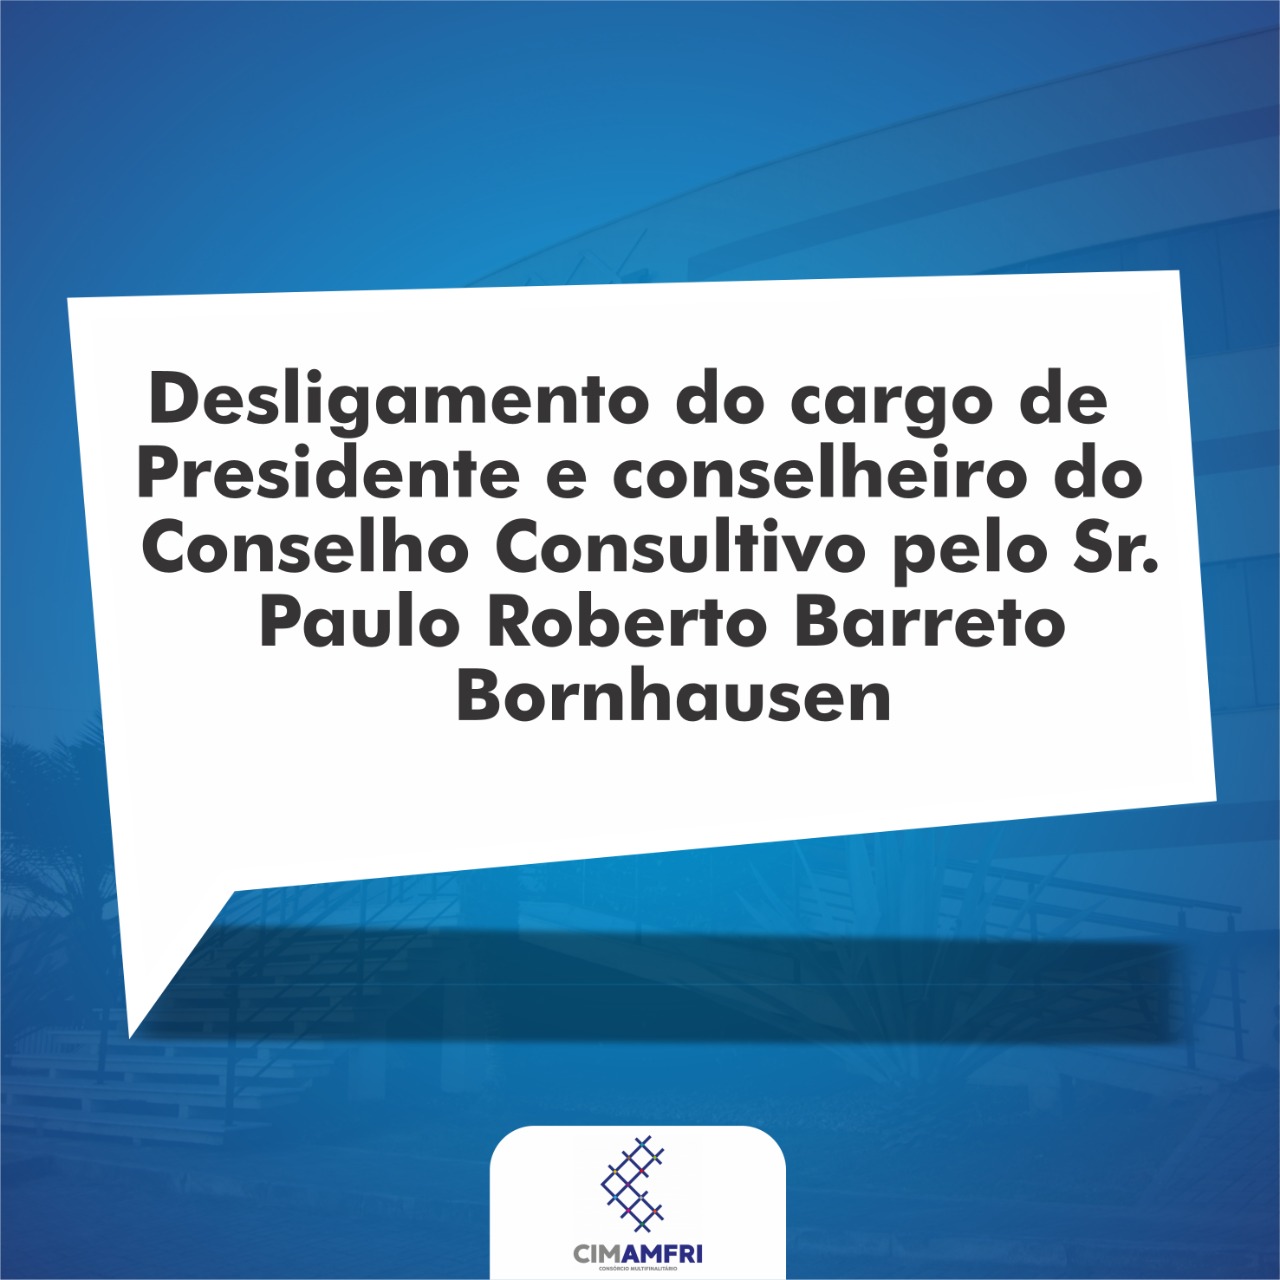 You are currently viewing Desligamento do cargo de Presidente e conselheiro do Conselho Consultivo pelo Sr. Paulo Roberto Barreto Bornhausen